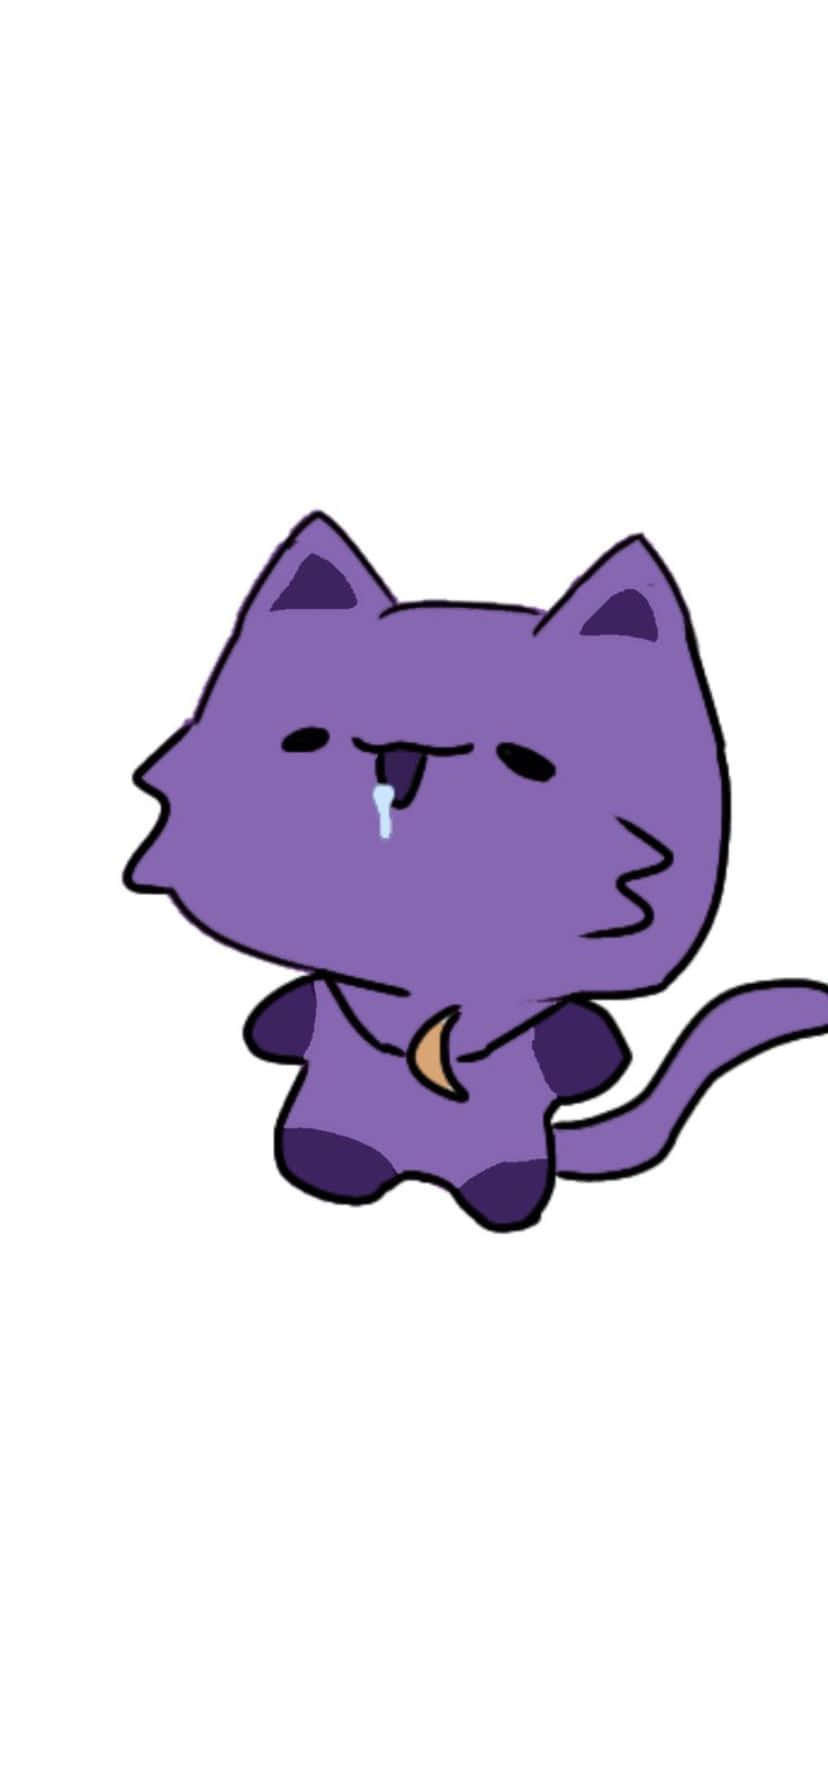 Purple Cartoon Cat Illustration Wallpaper